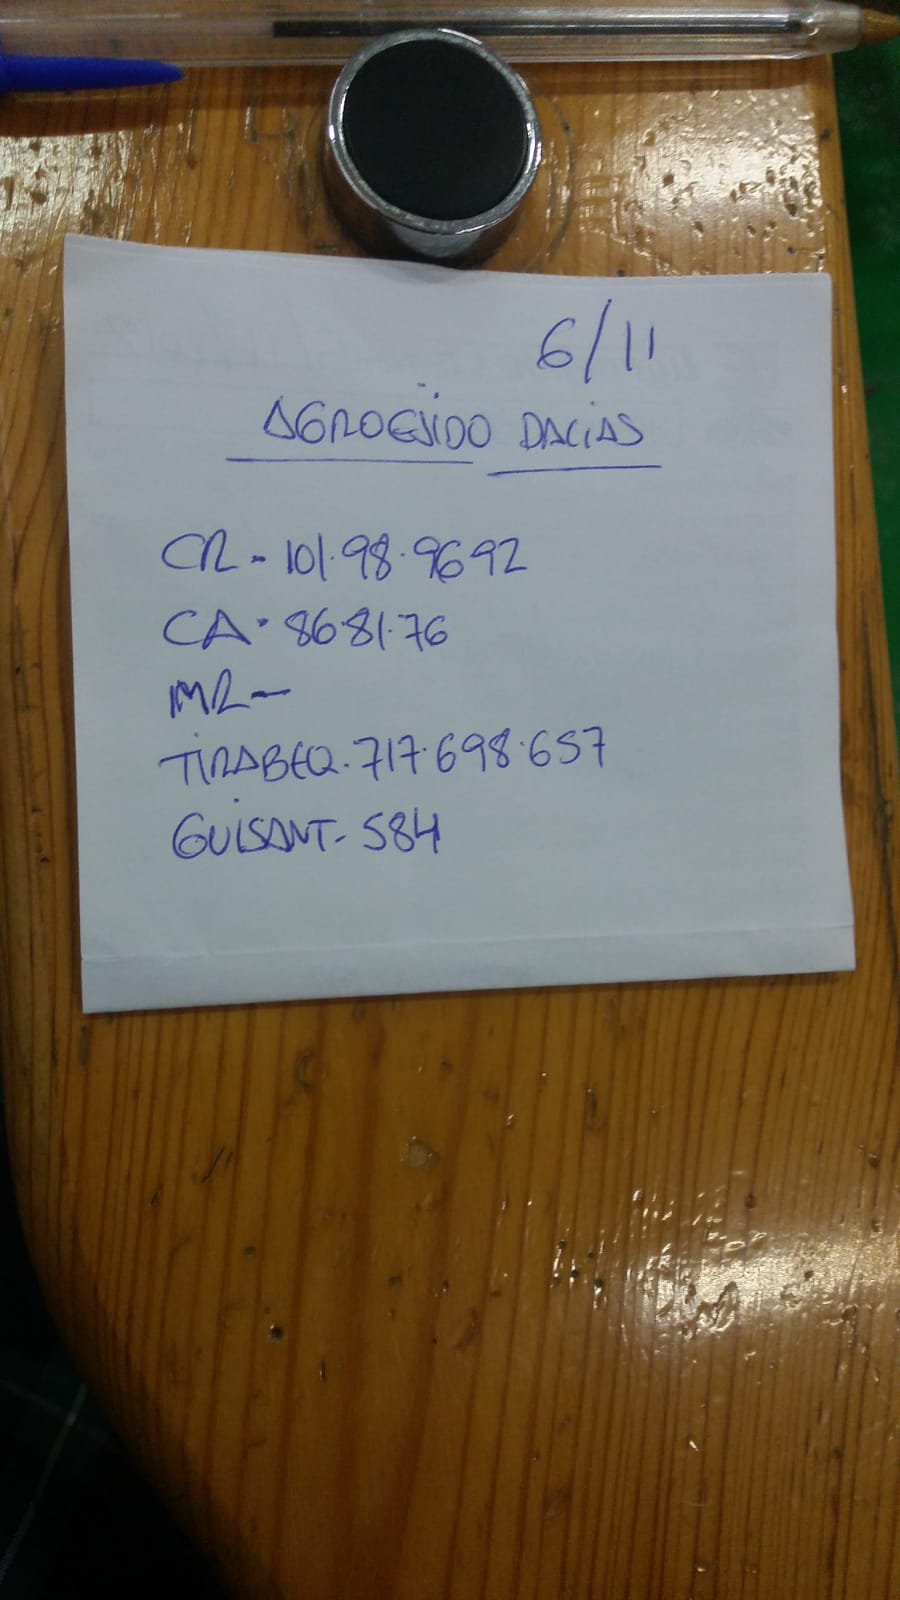 Subasta hortofrutícola AgroEjido Dalias 6 de Noviembre